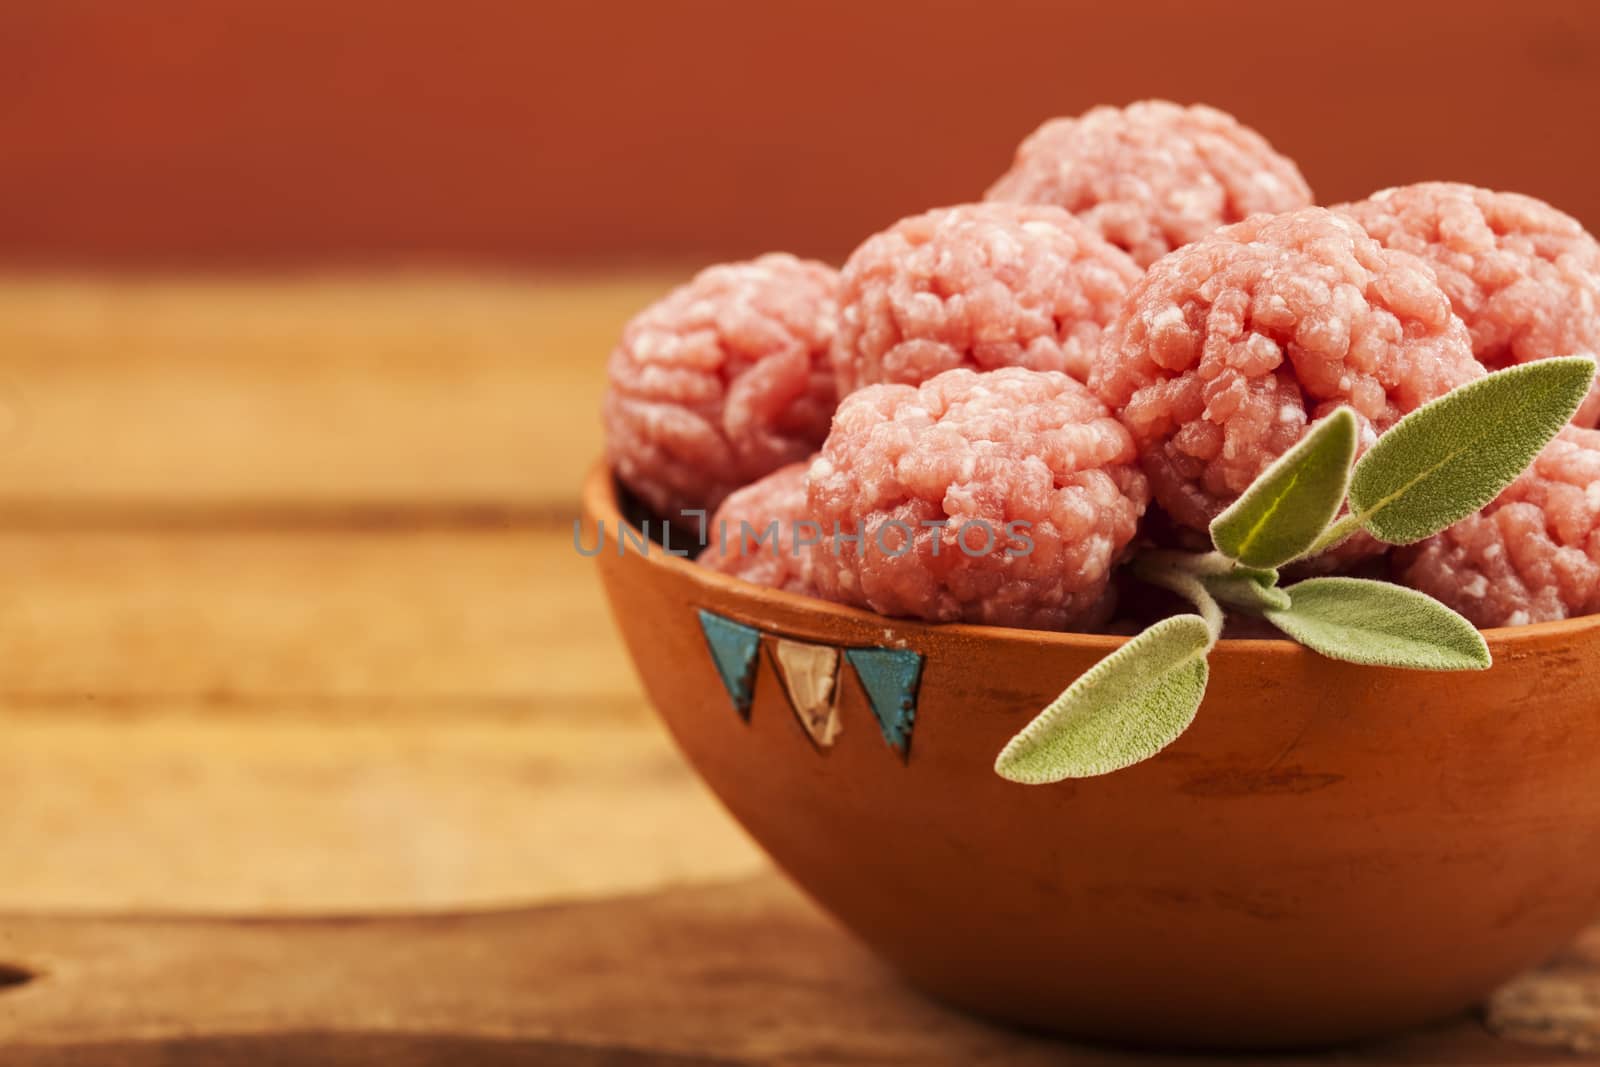 Raw meatballs by mariakomar